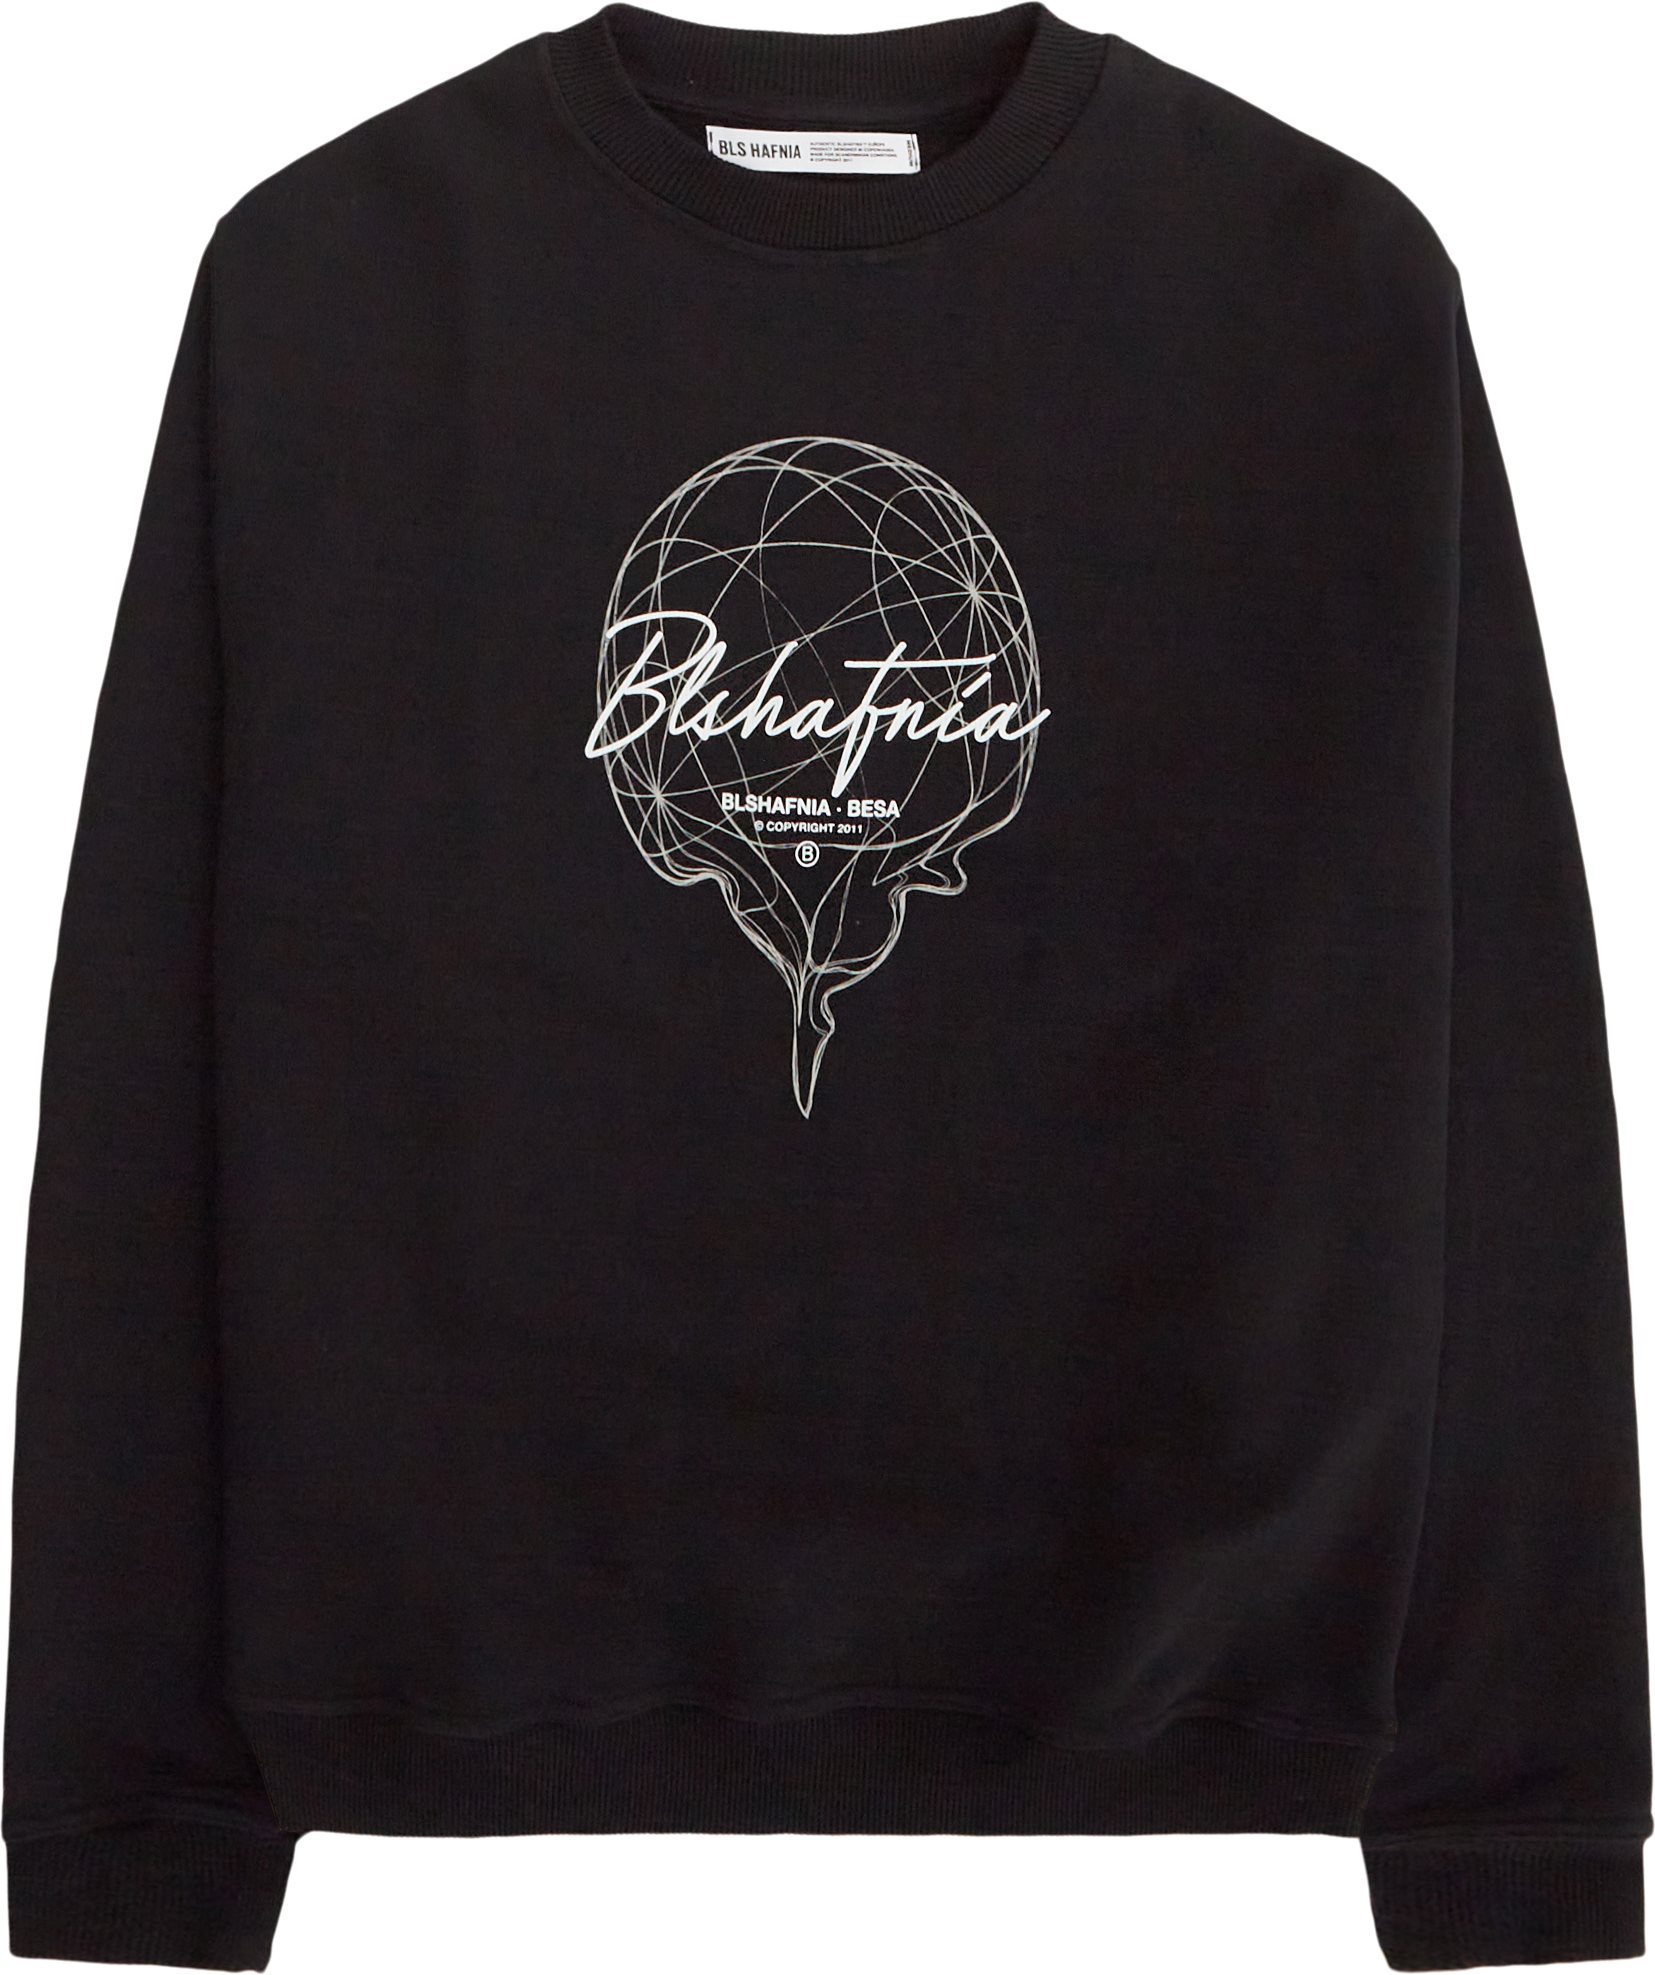 BLS Sweatshirts UNIVERSAL CREWNECK 202408067 Black